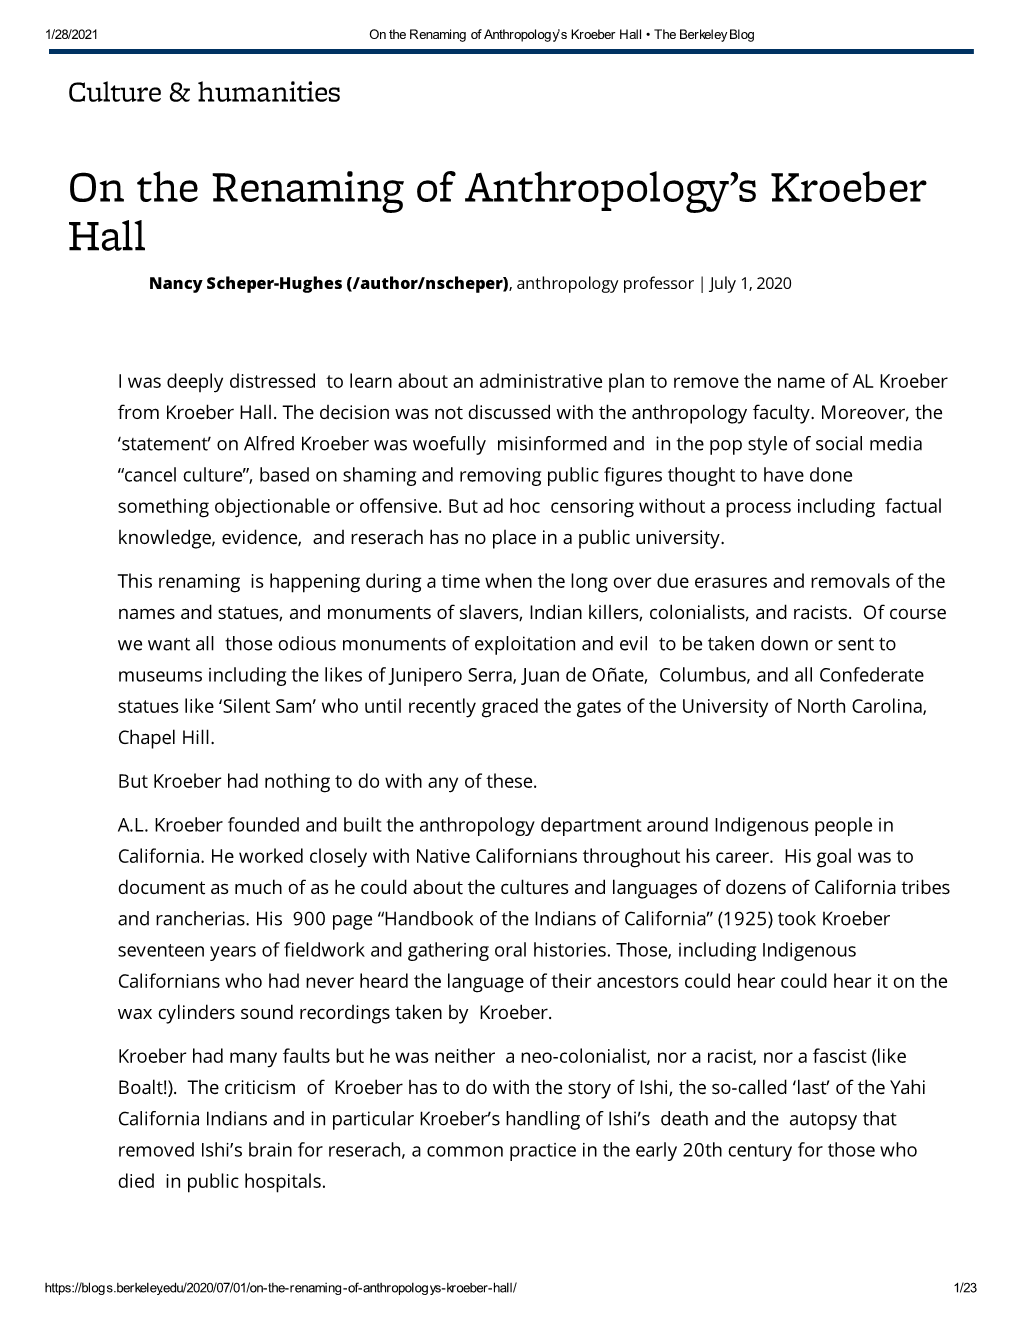 On the Renaming of Anthropology's Kroeber Hall